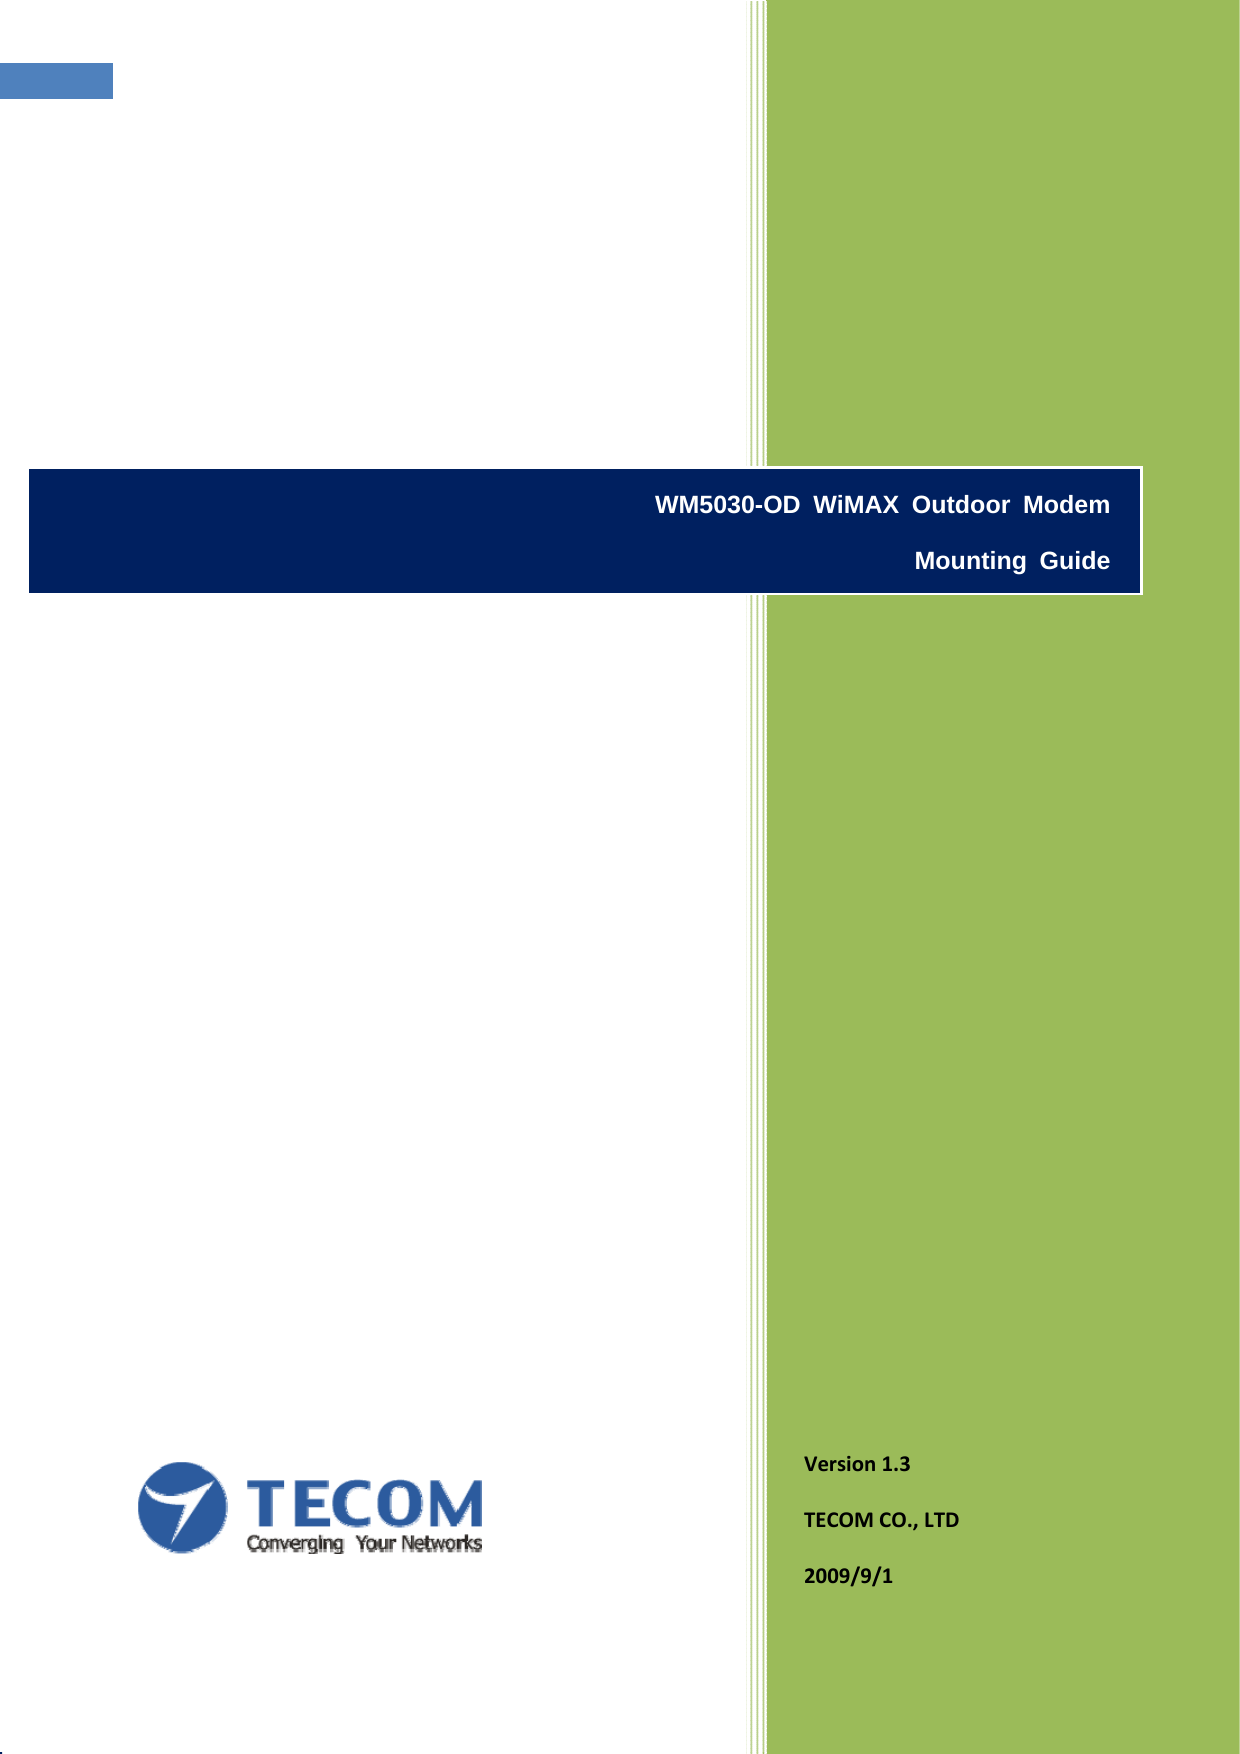                       Version1.3TECOMCO.,LTD2009/9/1WM5030-OD WiMAX Outdoor Modem Mounting Guide 